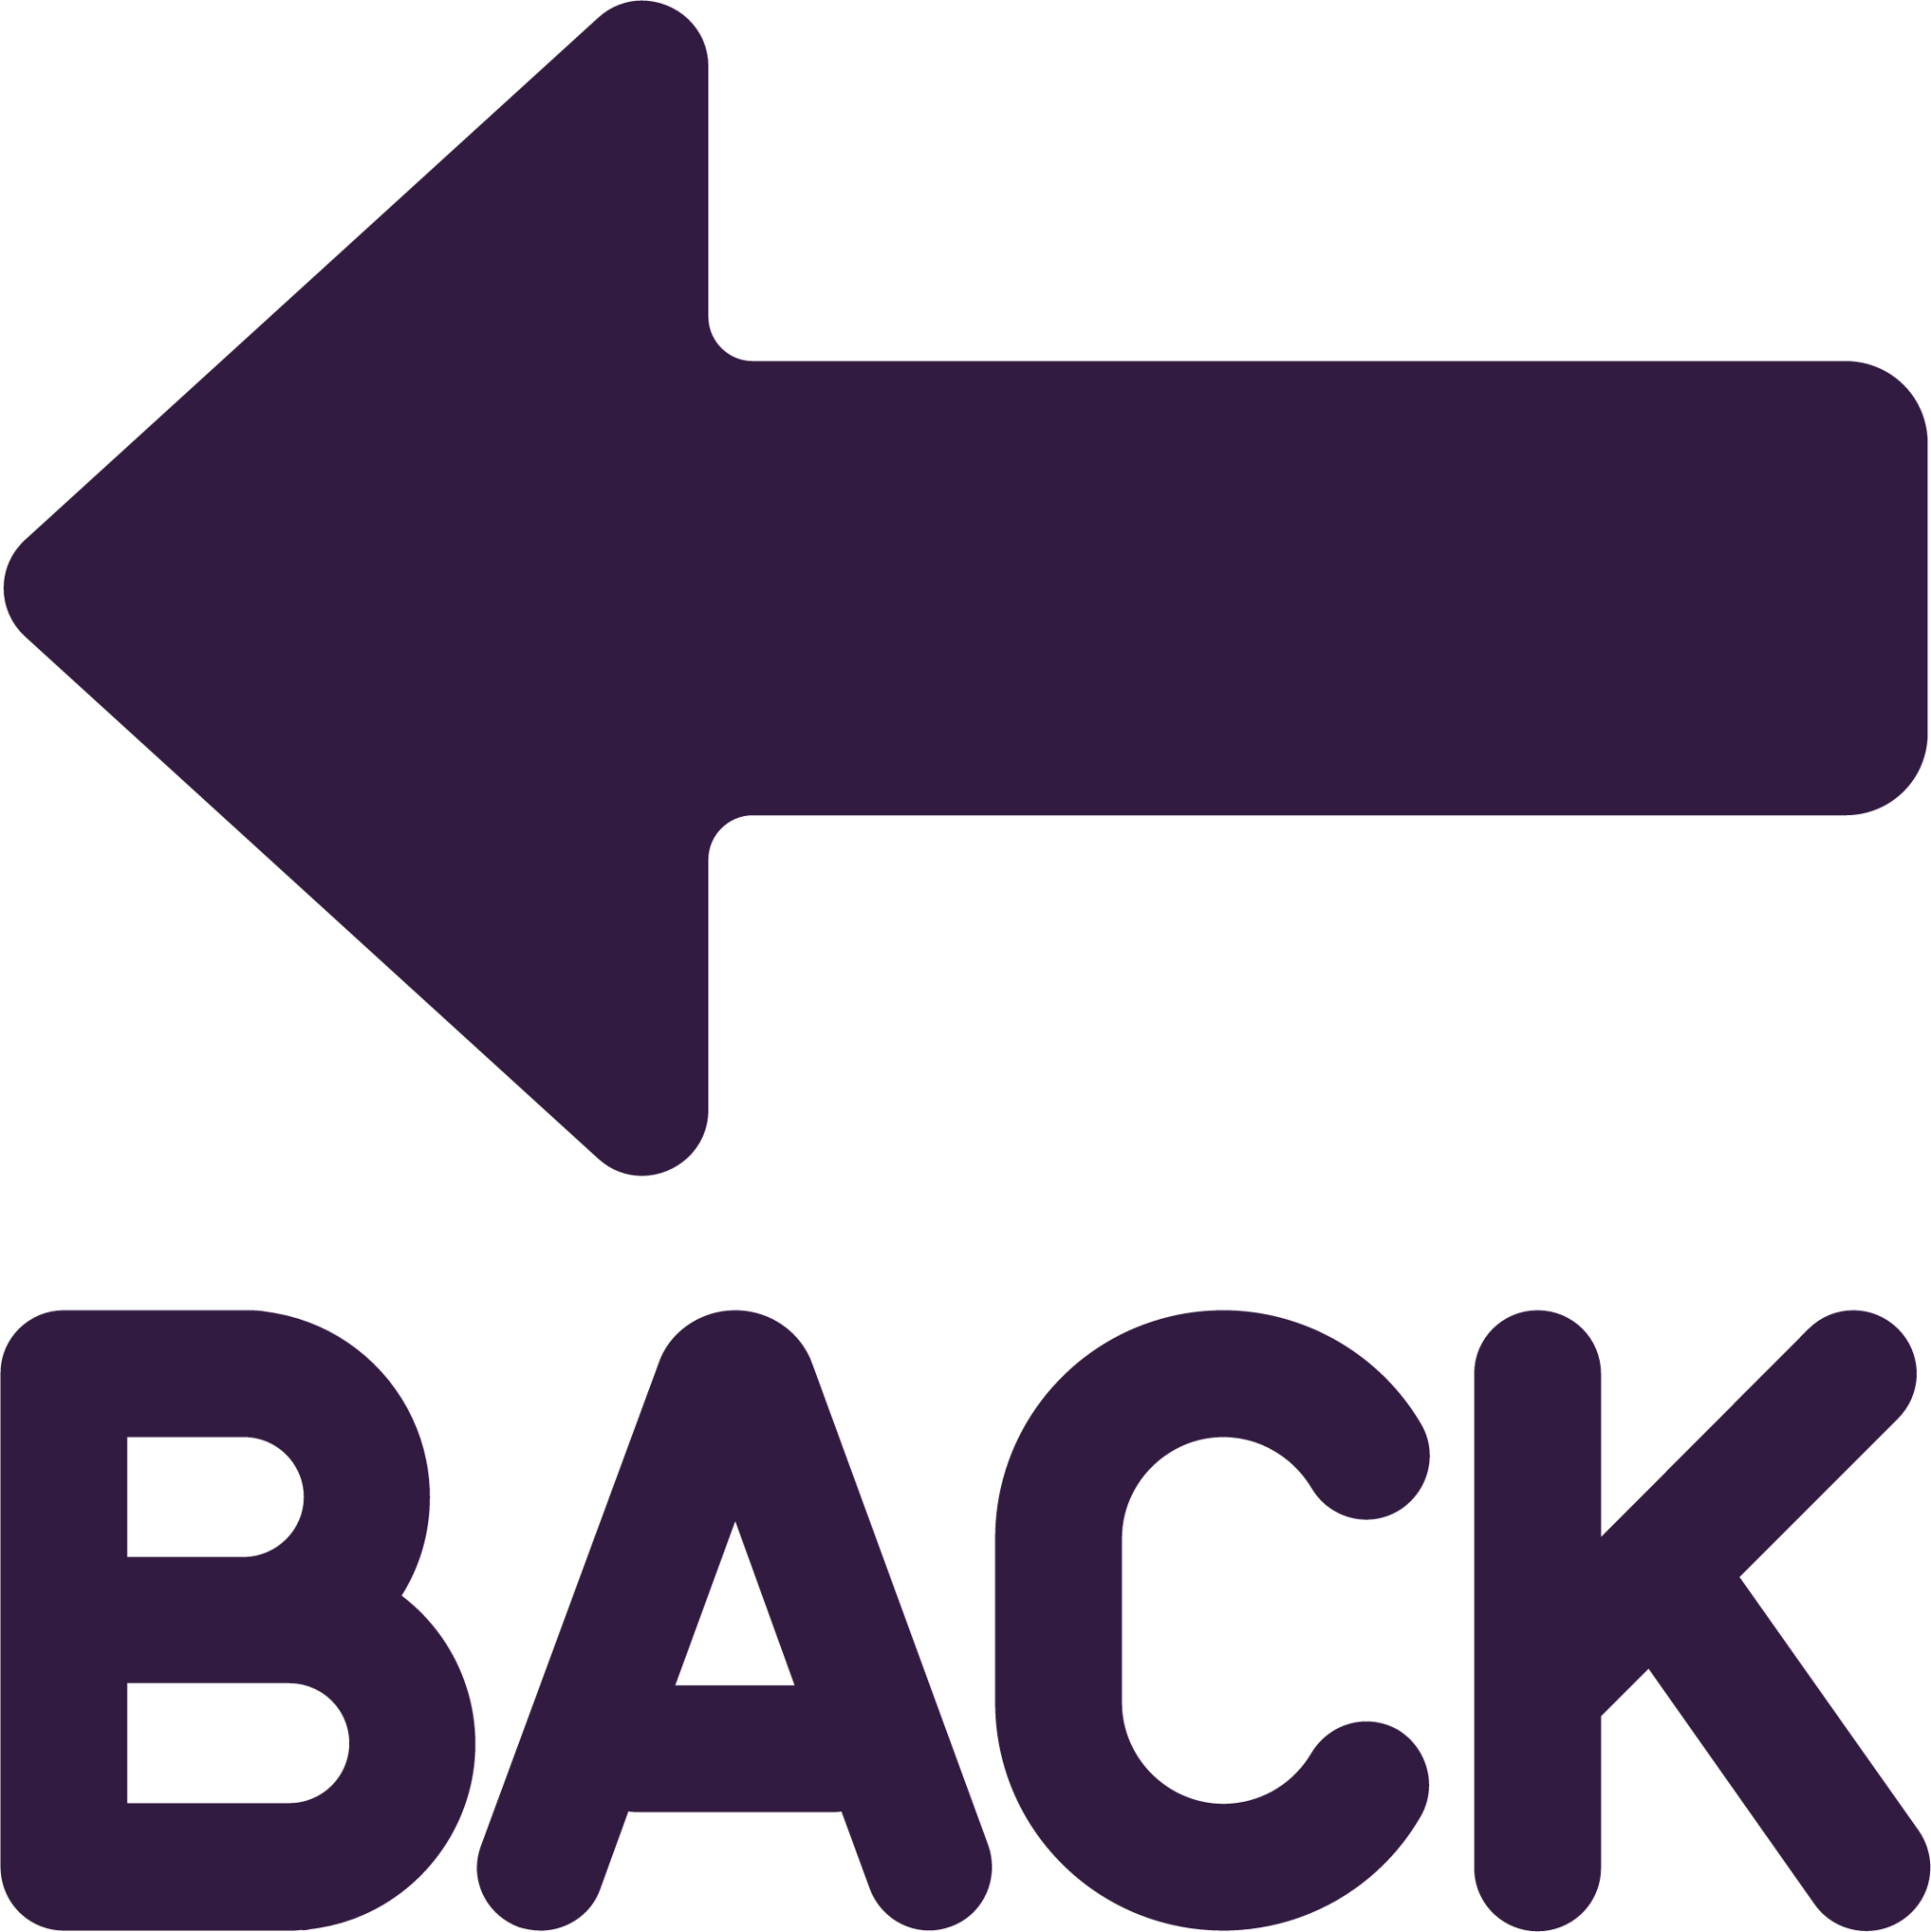 back arrow emoji